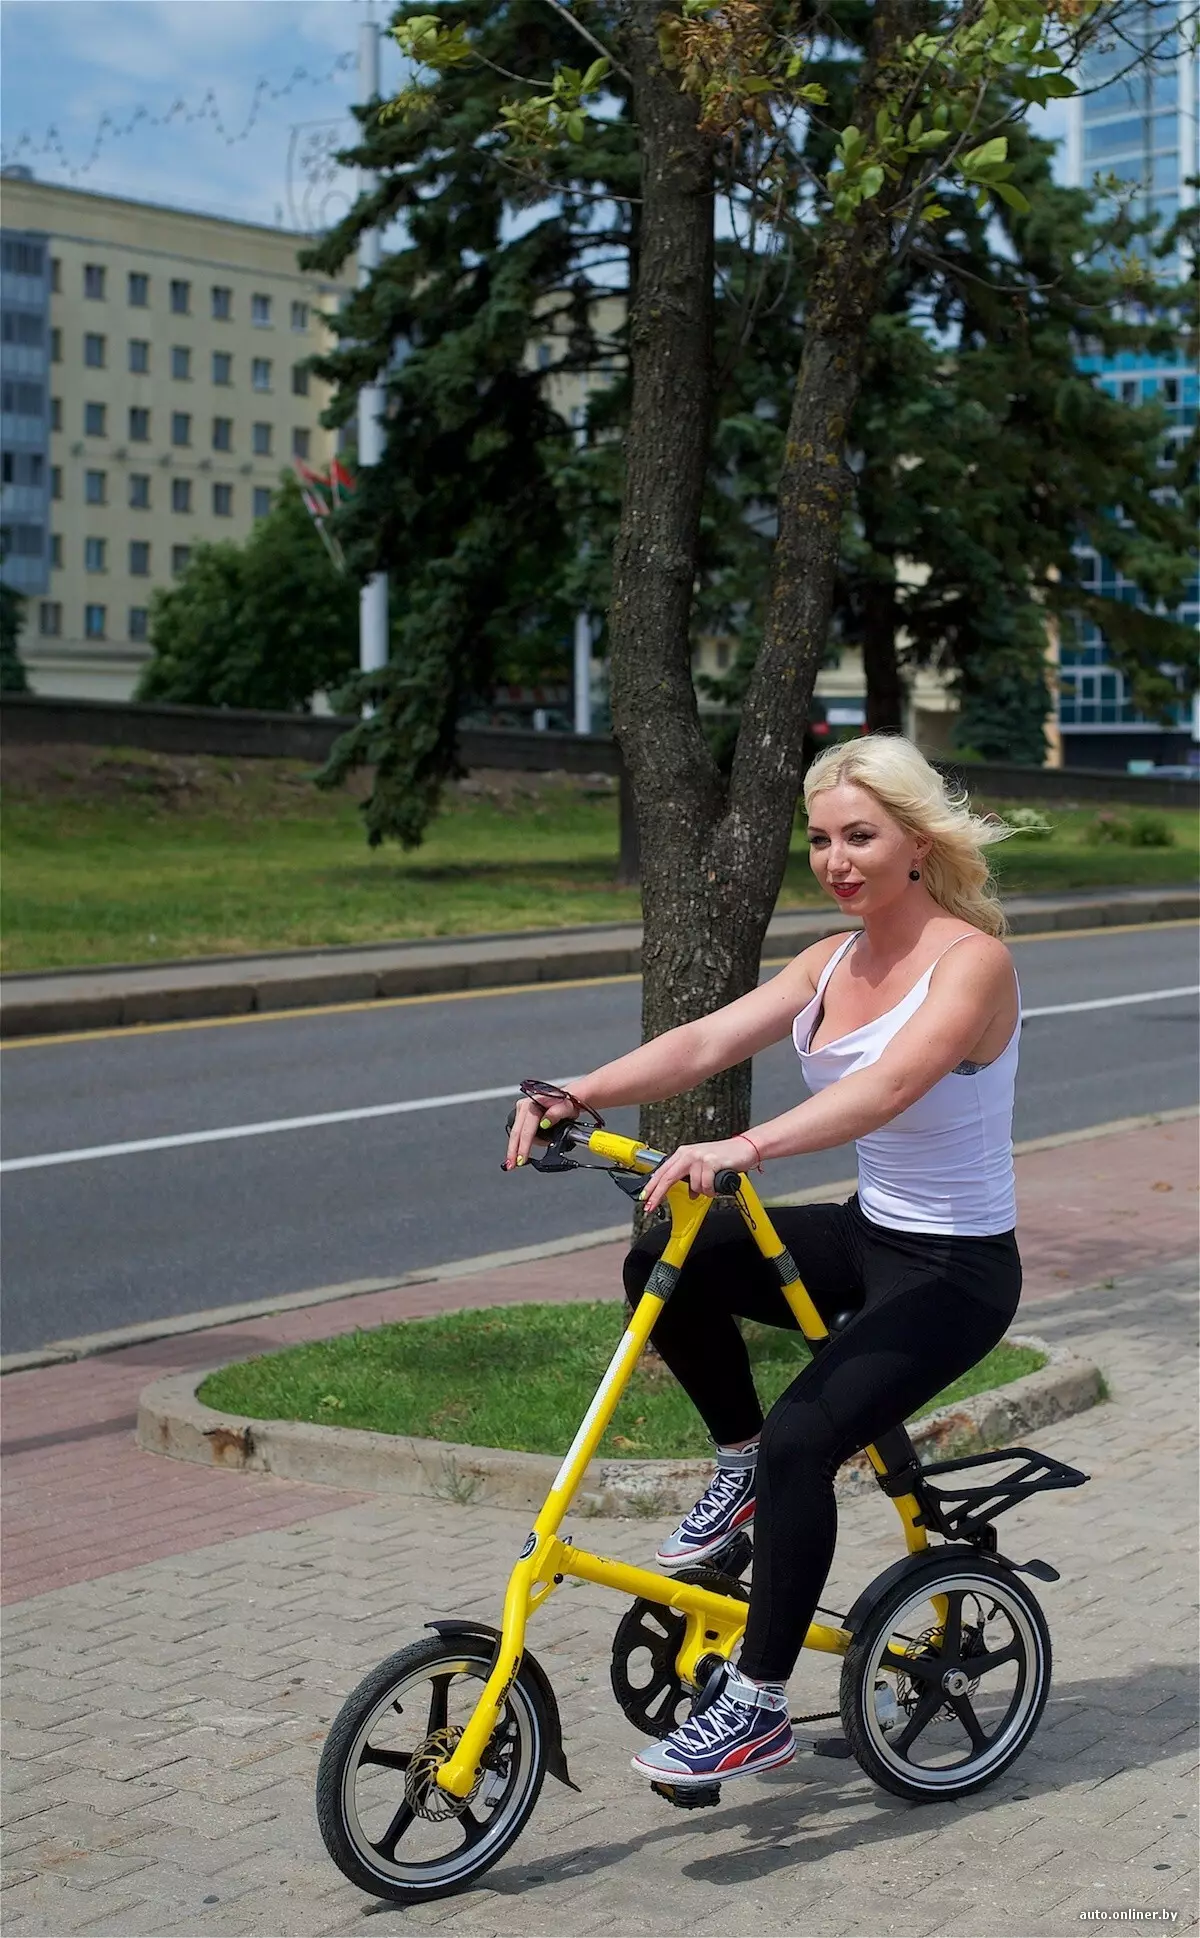 Strida Bike: Pembinaan dan berat basikal triangular lipat. Gambaran keseluruhan model popular, sejarah penciptaan, pemilihan subtleties 20400_22